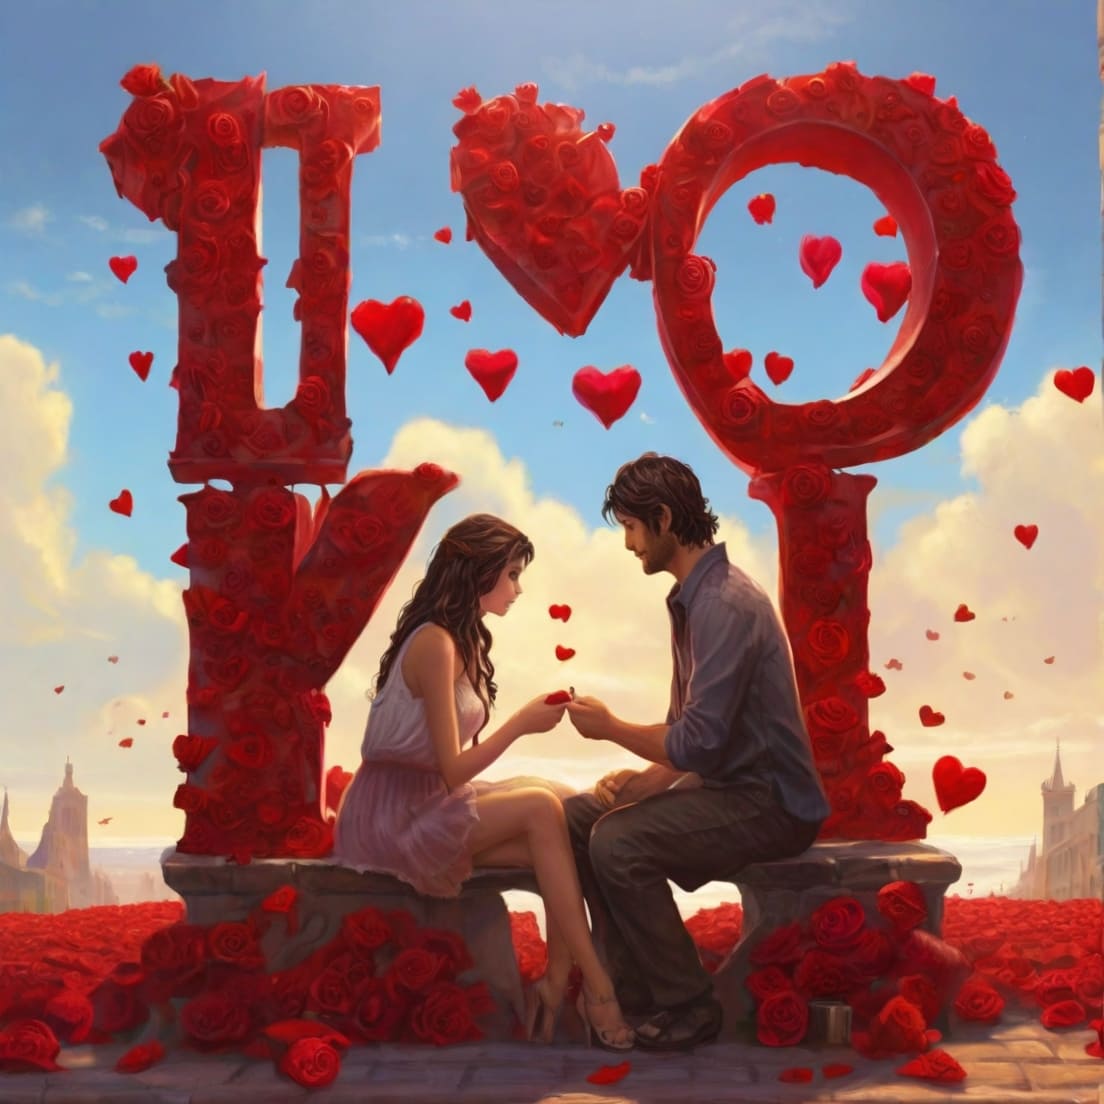 love story rose 1 209